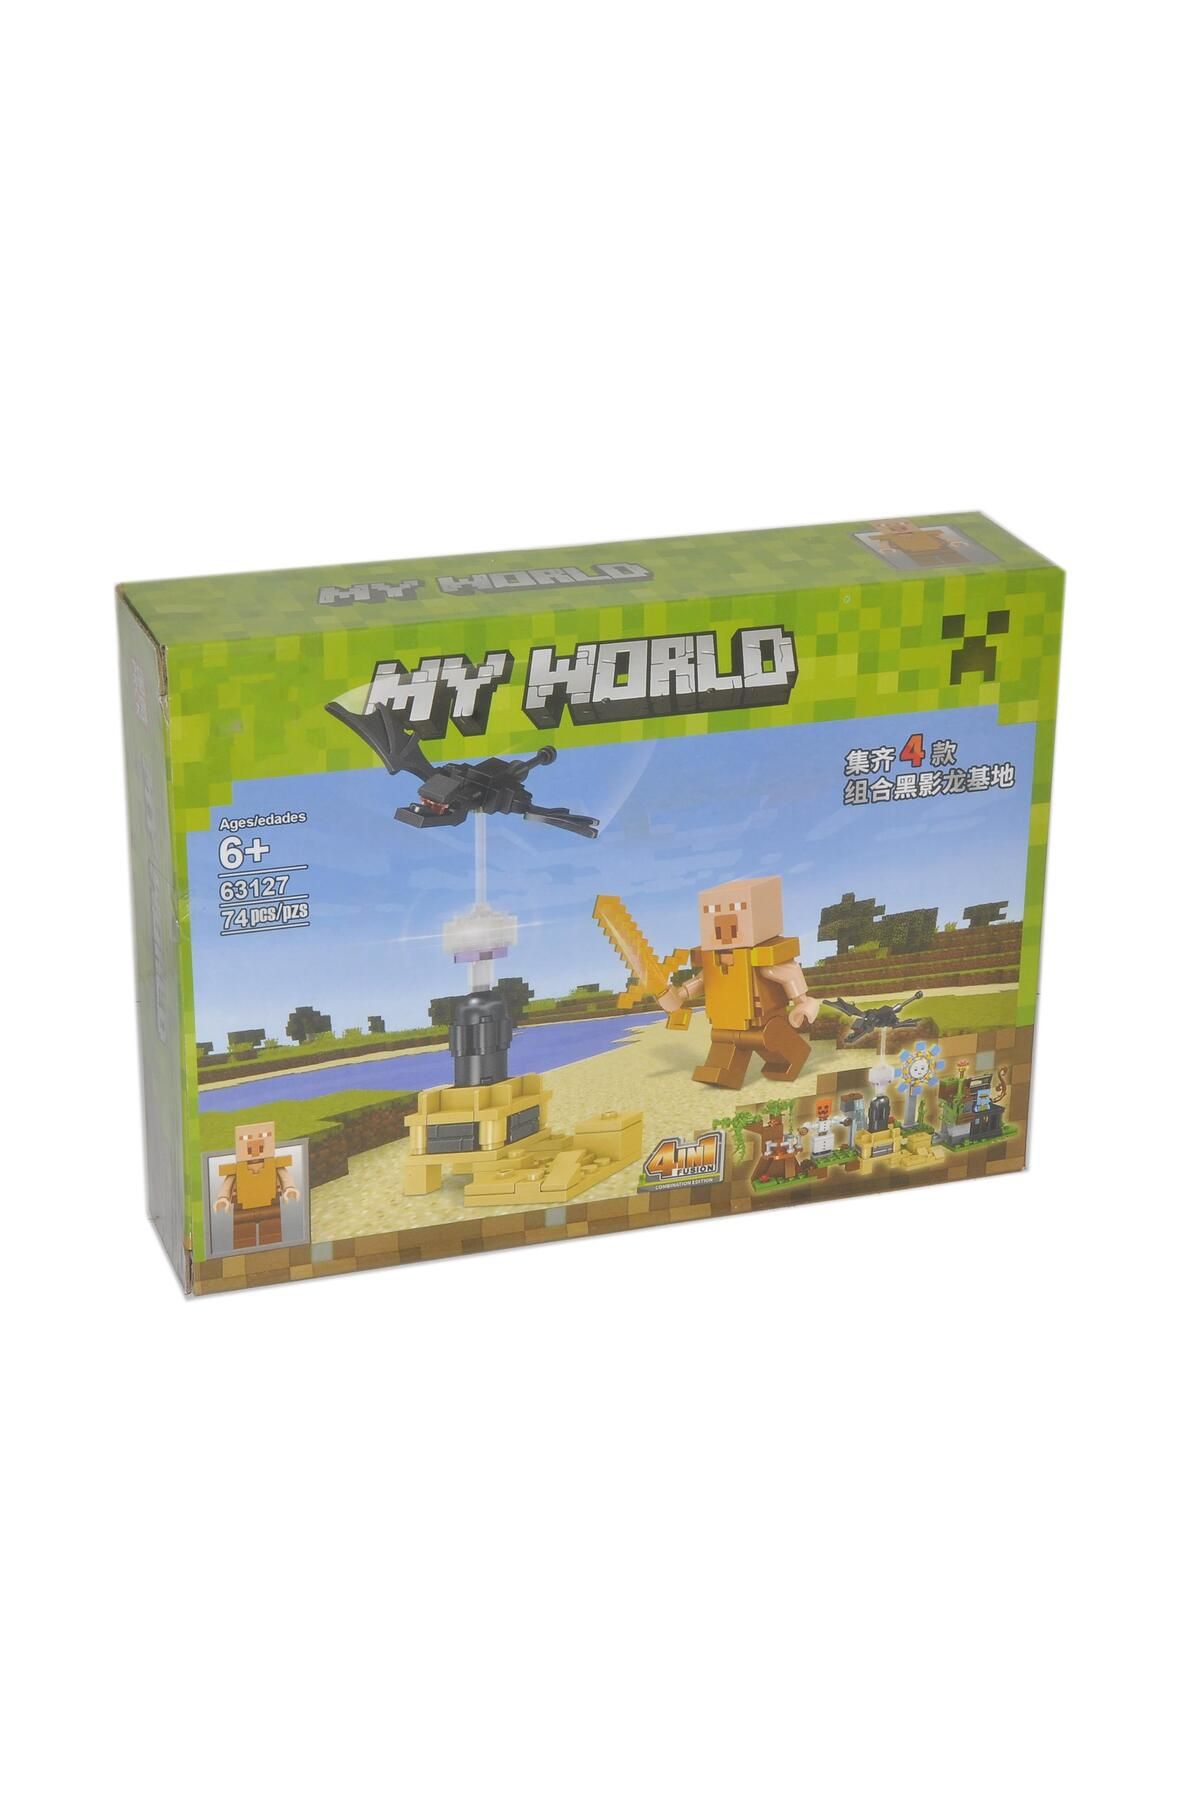 e-life shop Es63127 Lego Uyumlu Minecraft Ender Dragon Blok Yapı Oyuncağı Mini Figür Oyuncak Seti 74 Parça